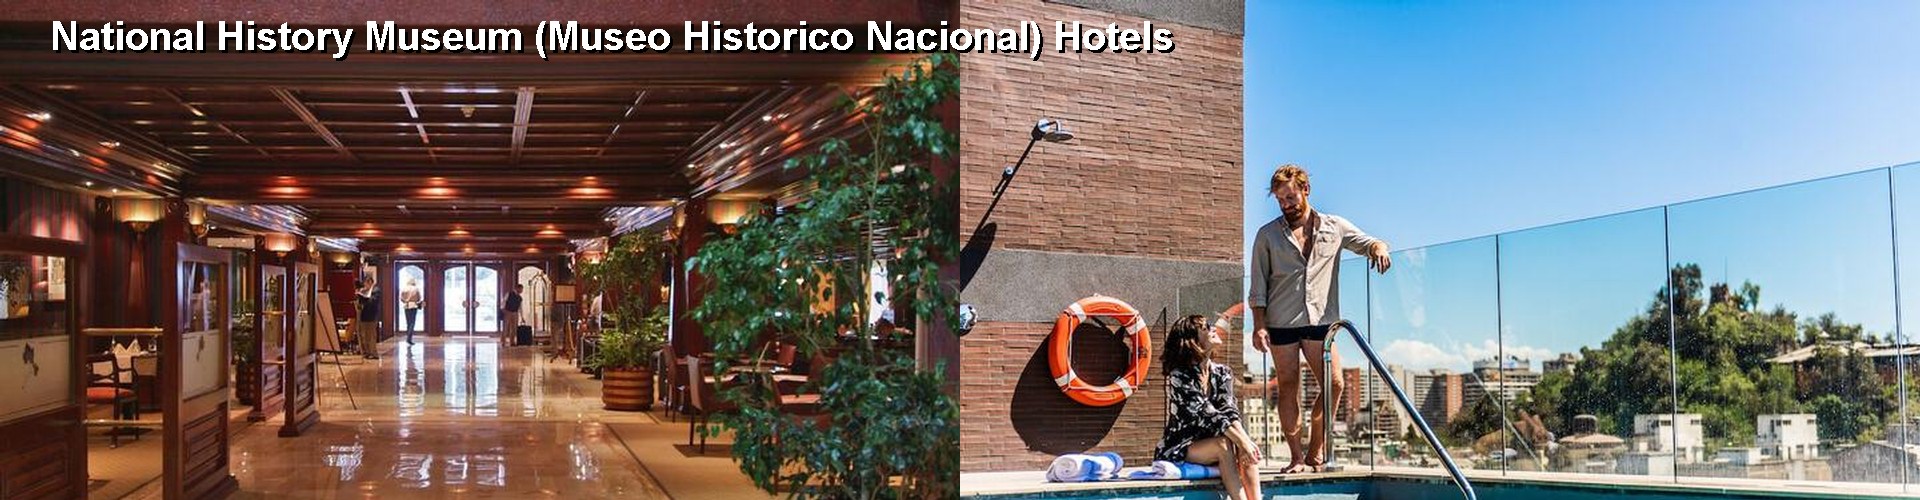 5 Best Hotels near National History Museum (Museo Historico Nacional)